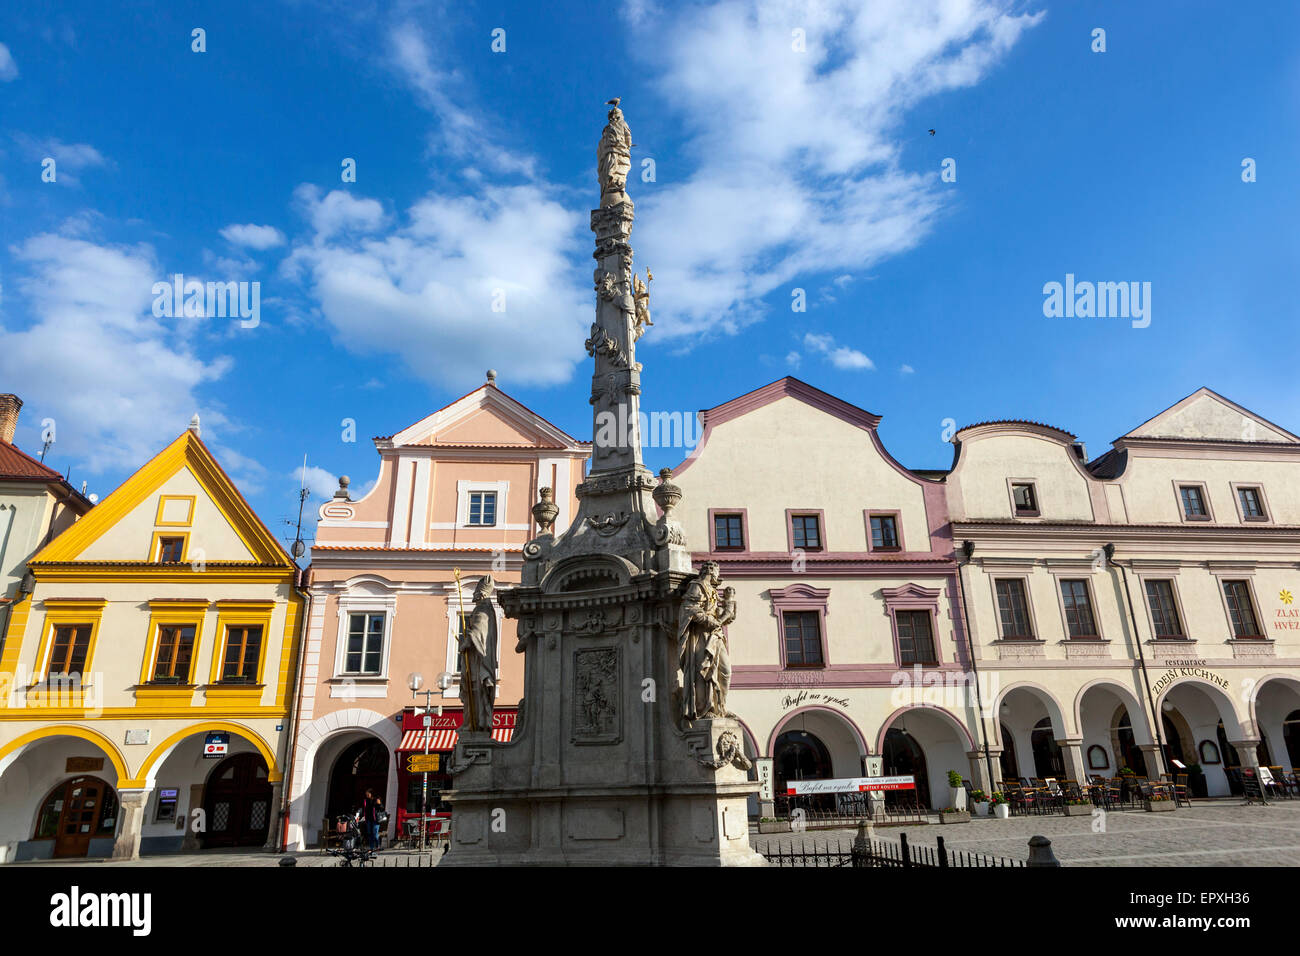 Historische Altstadt, Trebon, Tschechische Republik Stockfoto